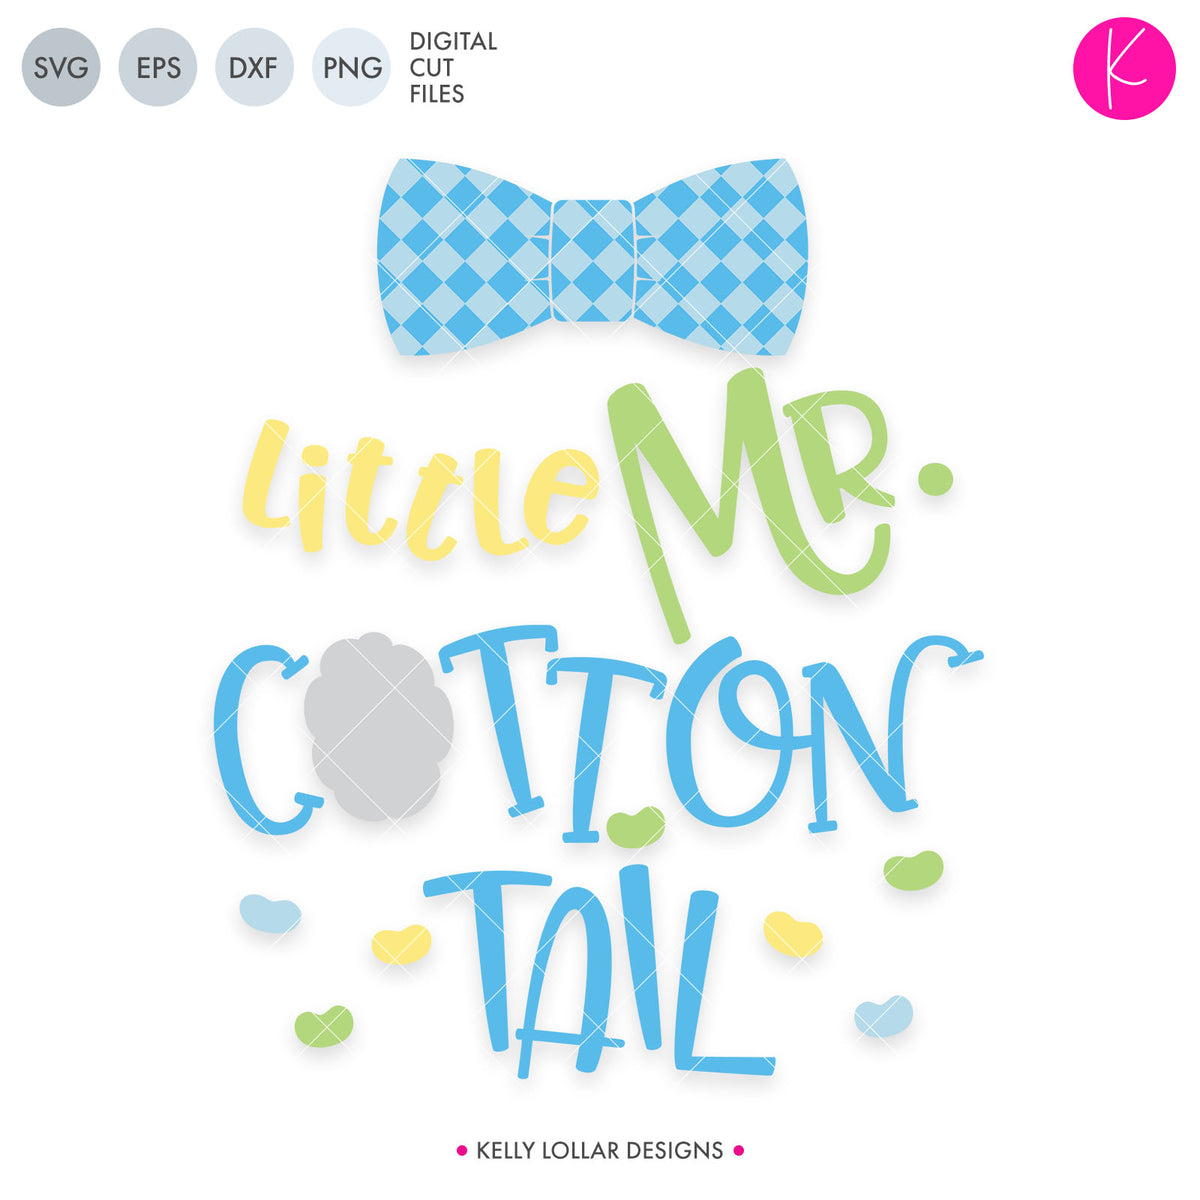 Little Mr. Cottontail | SVG DXF EPS PNG Cut Files